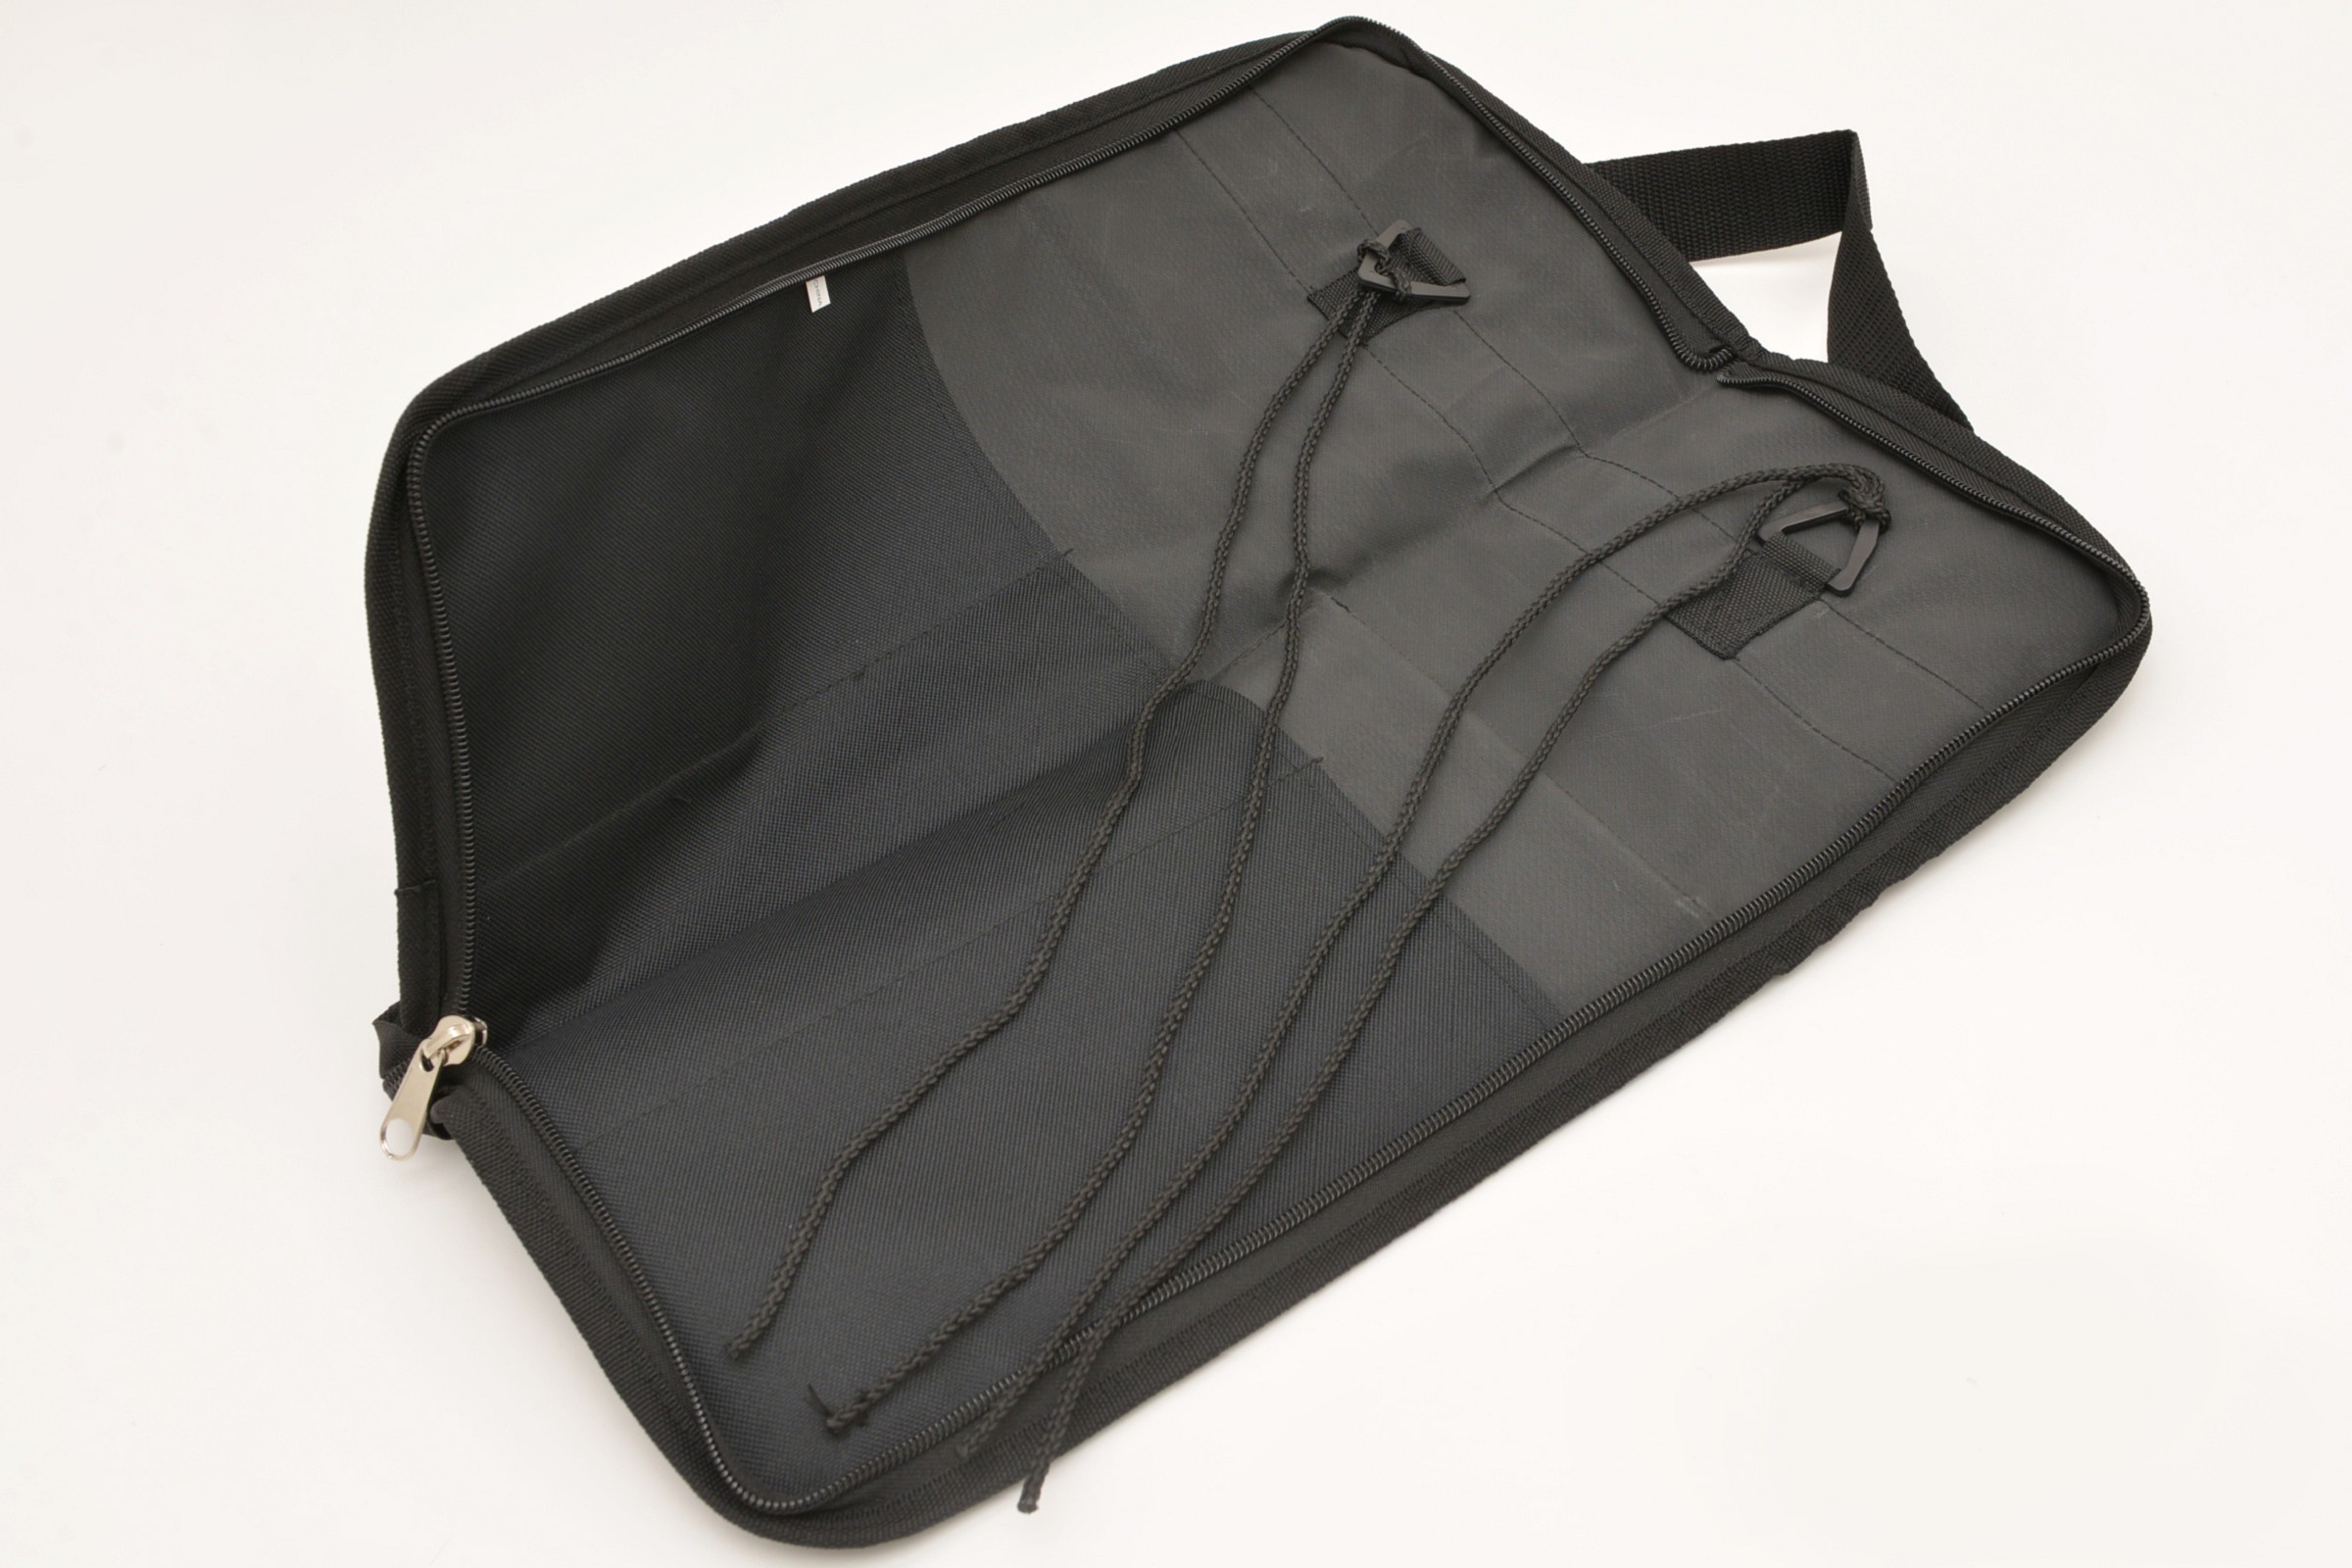 Regal Tip PR-380B Stick Bag